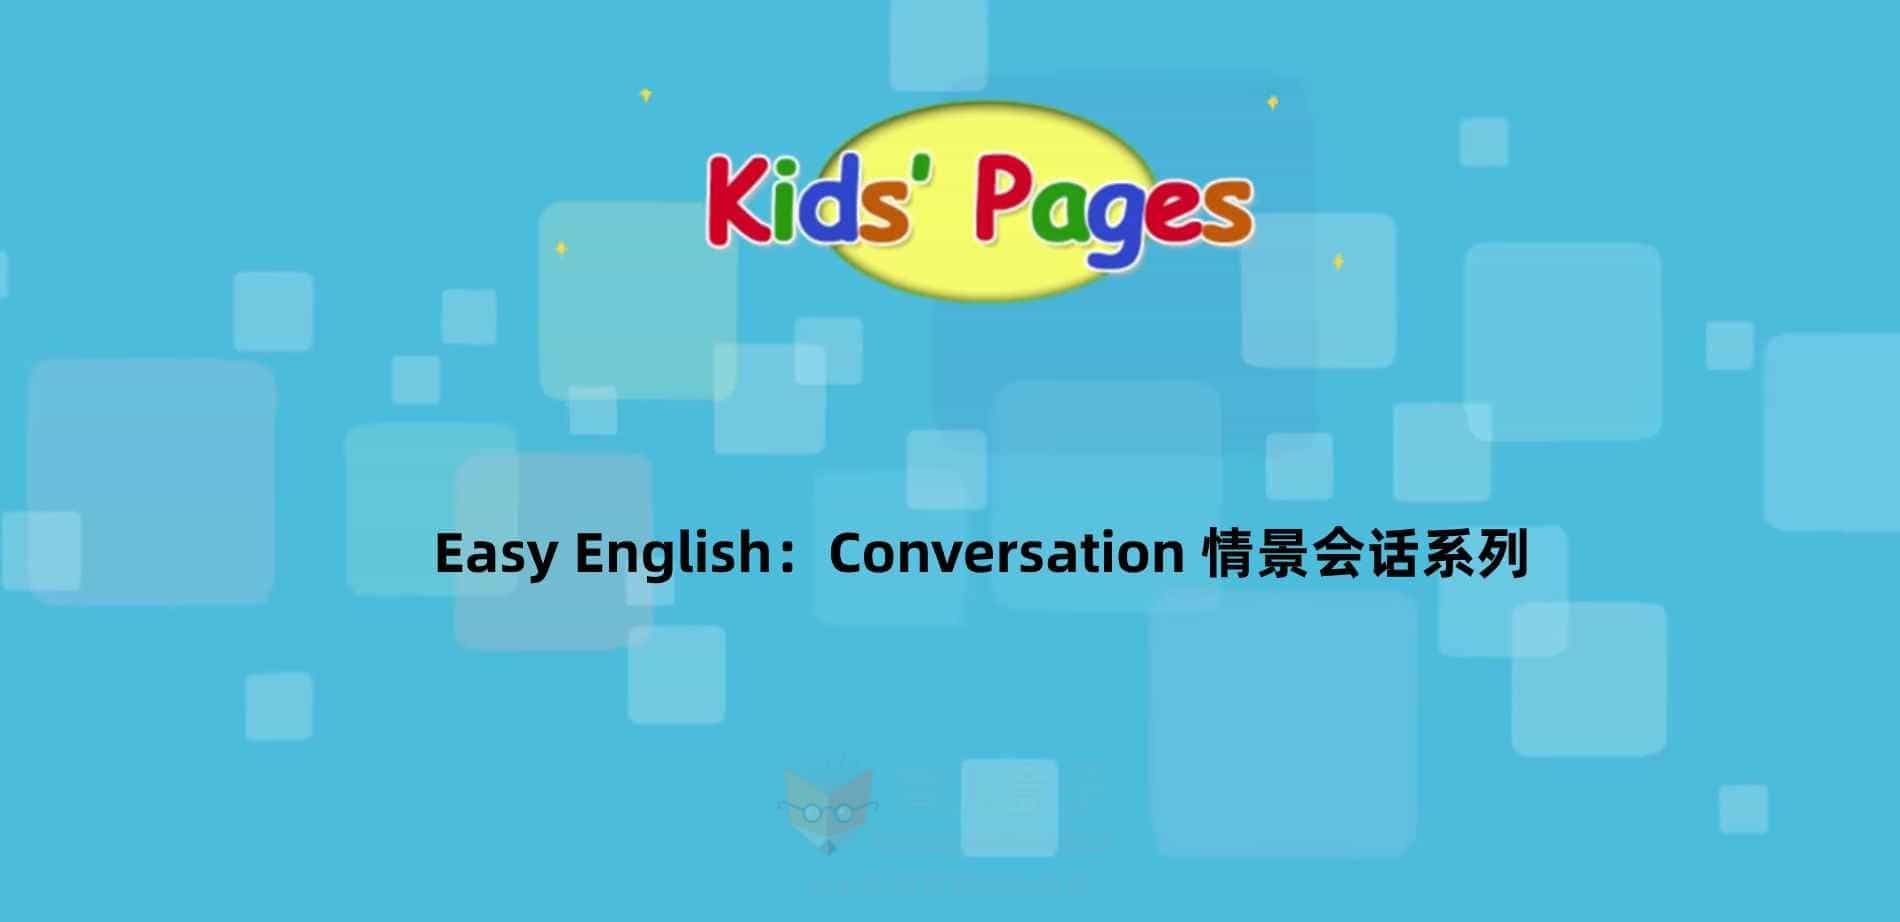  Easy English：Conversation 情景会话系列动画 适合6岁以上的儿童  高清视频